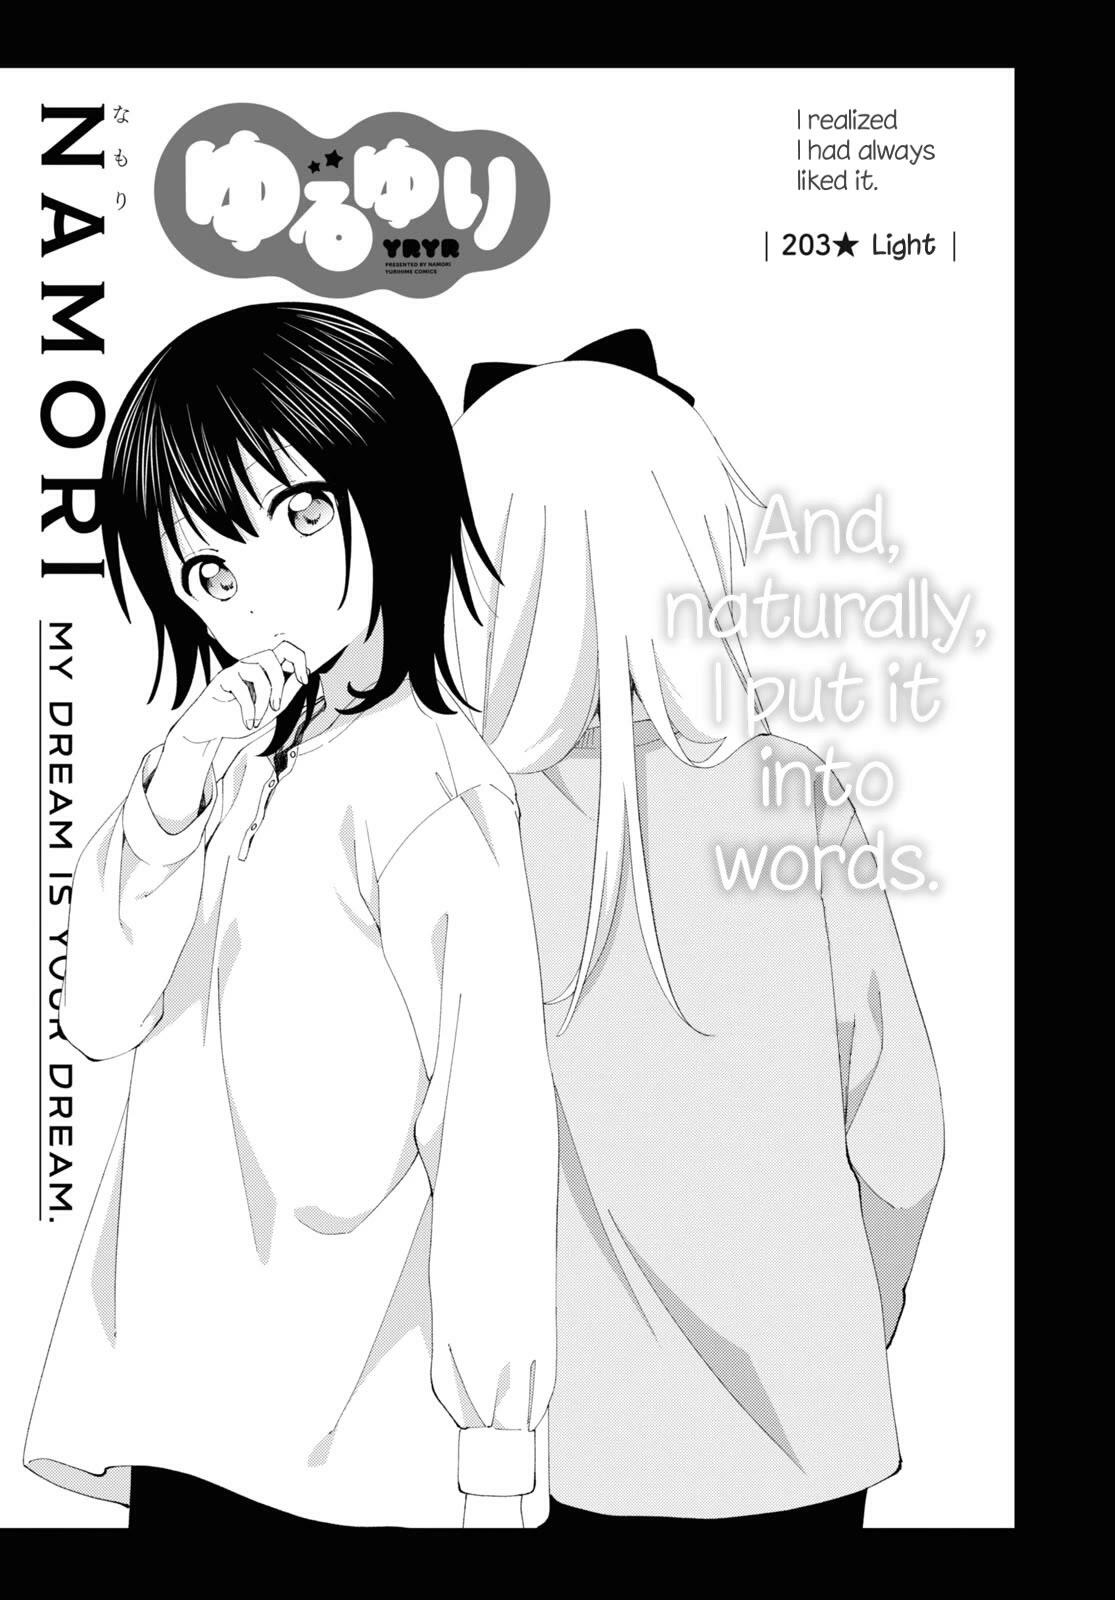 Read Isekai Nonbiri Nouka Manga Chapter 105 in English Free Online